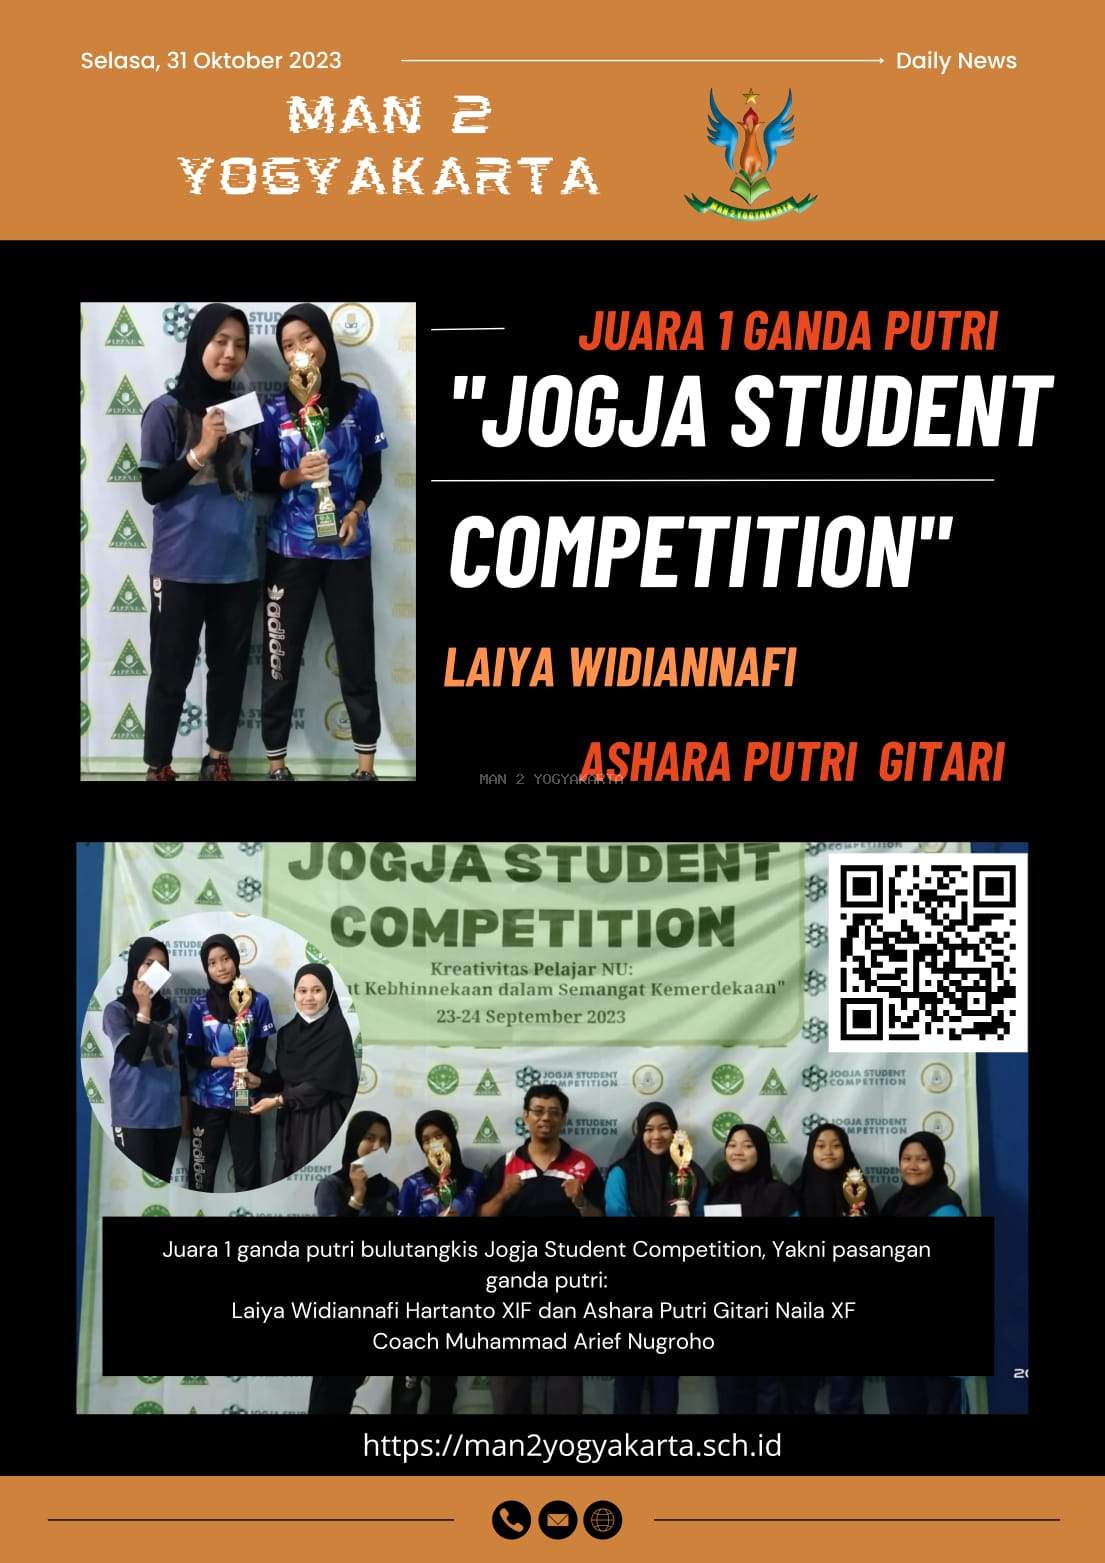 Laiya Widiannafi  dan Ashara Putri Gitari Naila Raih Juara 1 Ganda Putri Jogja Student Competition